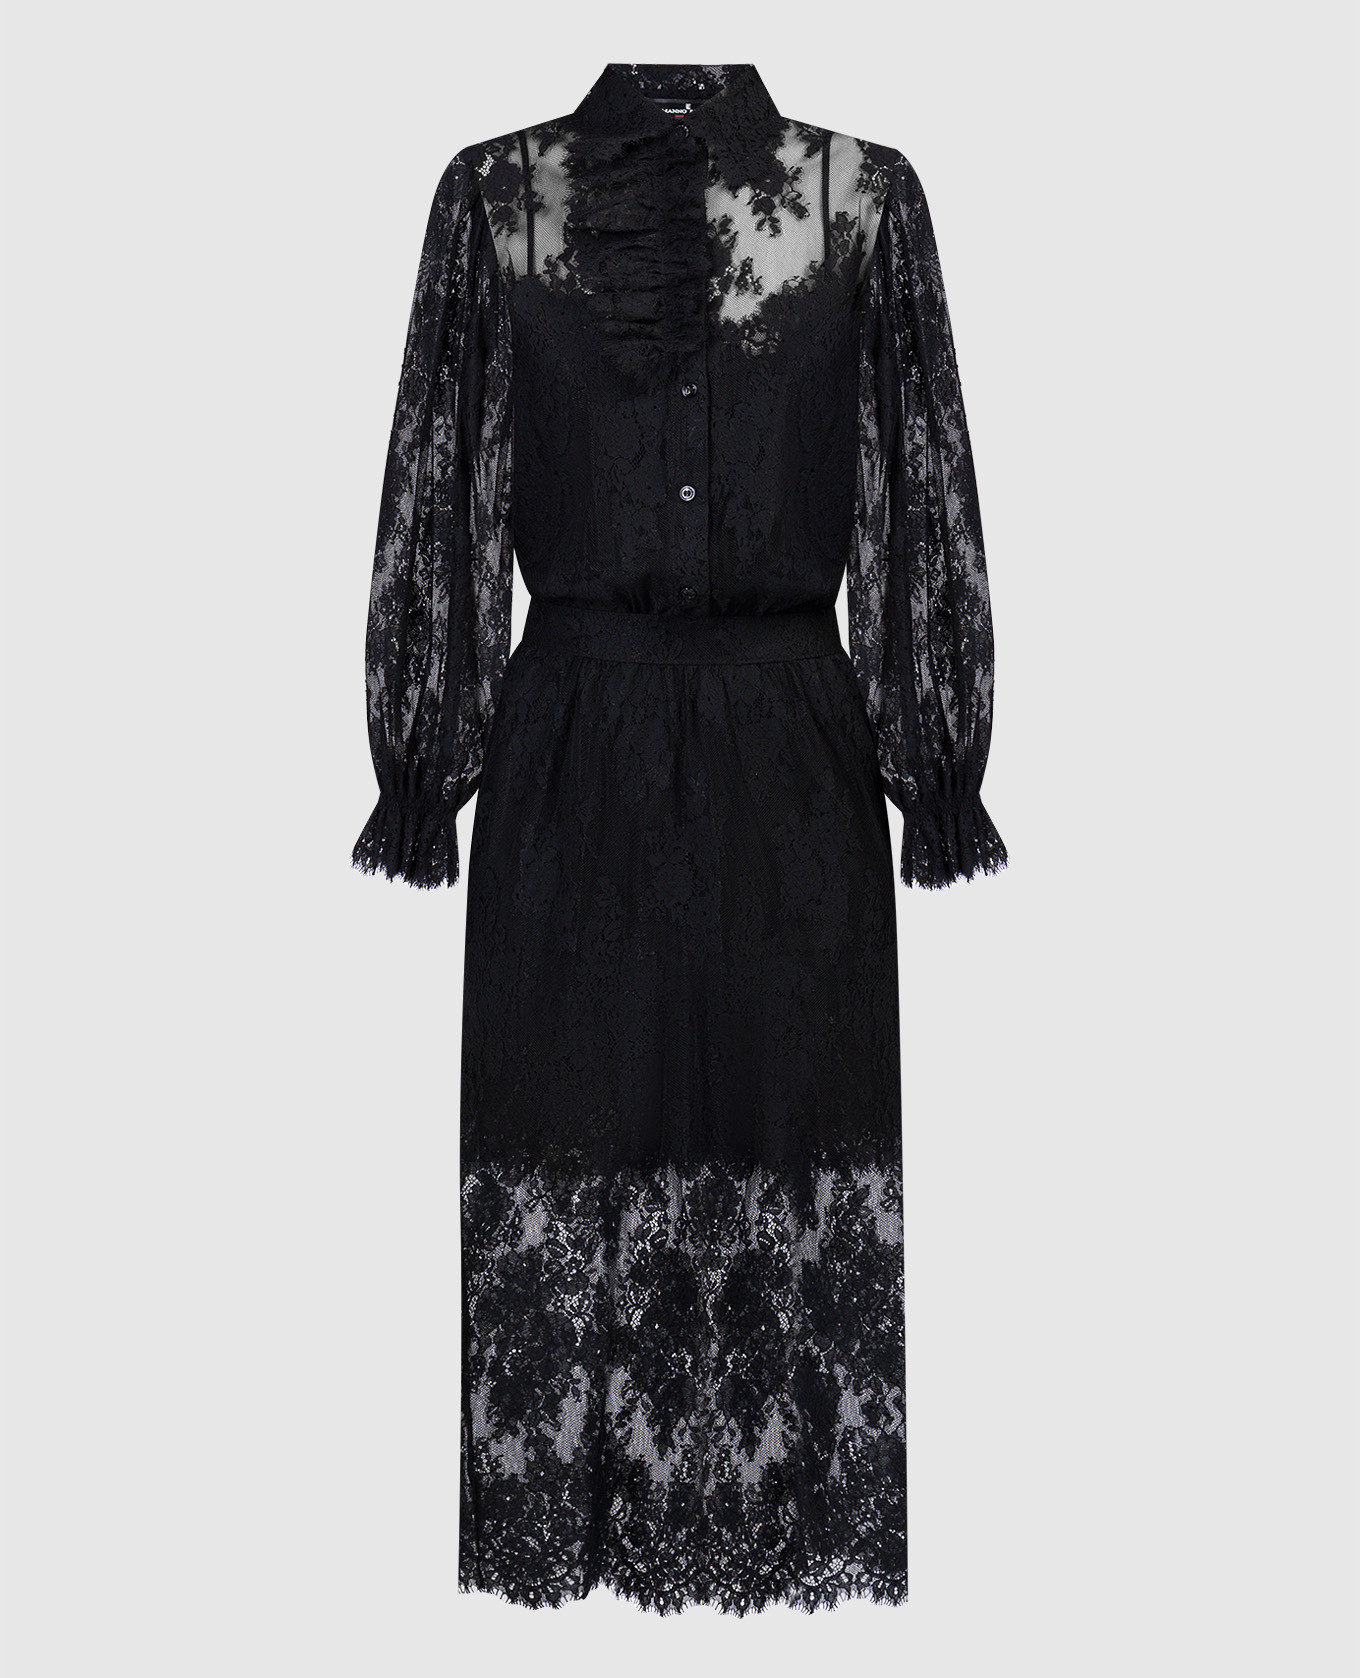 Black midi dress with lace